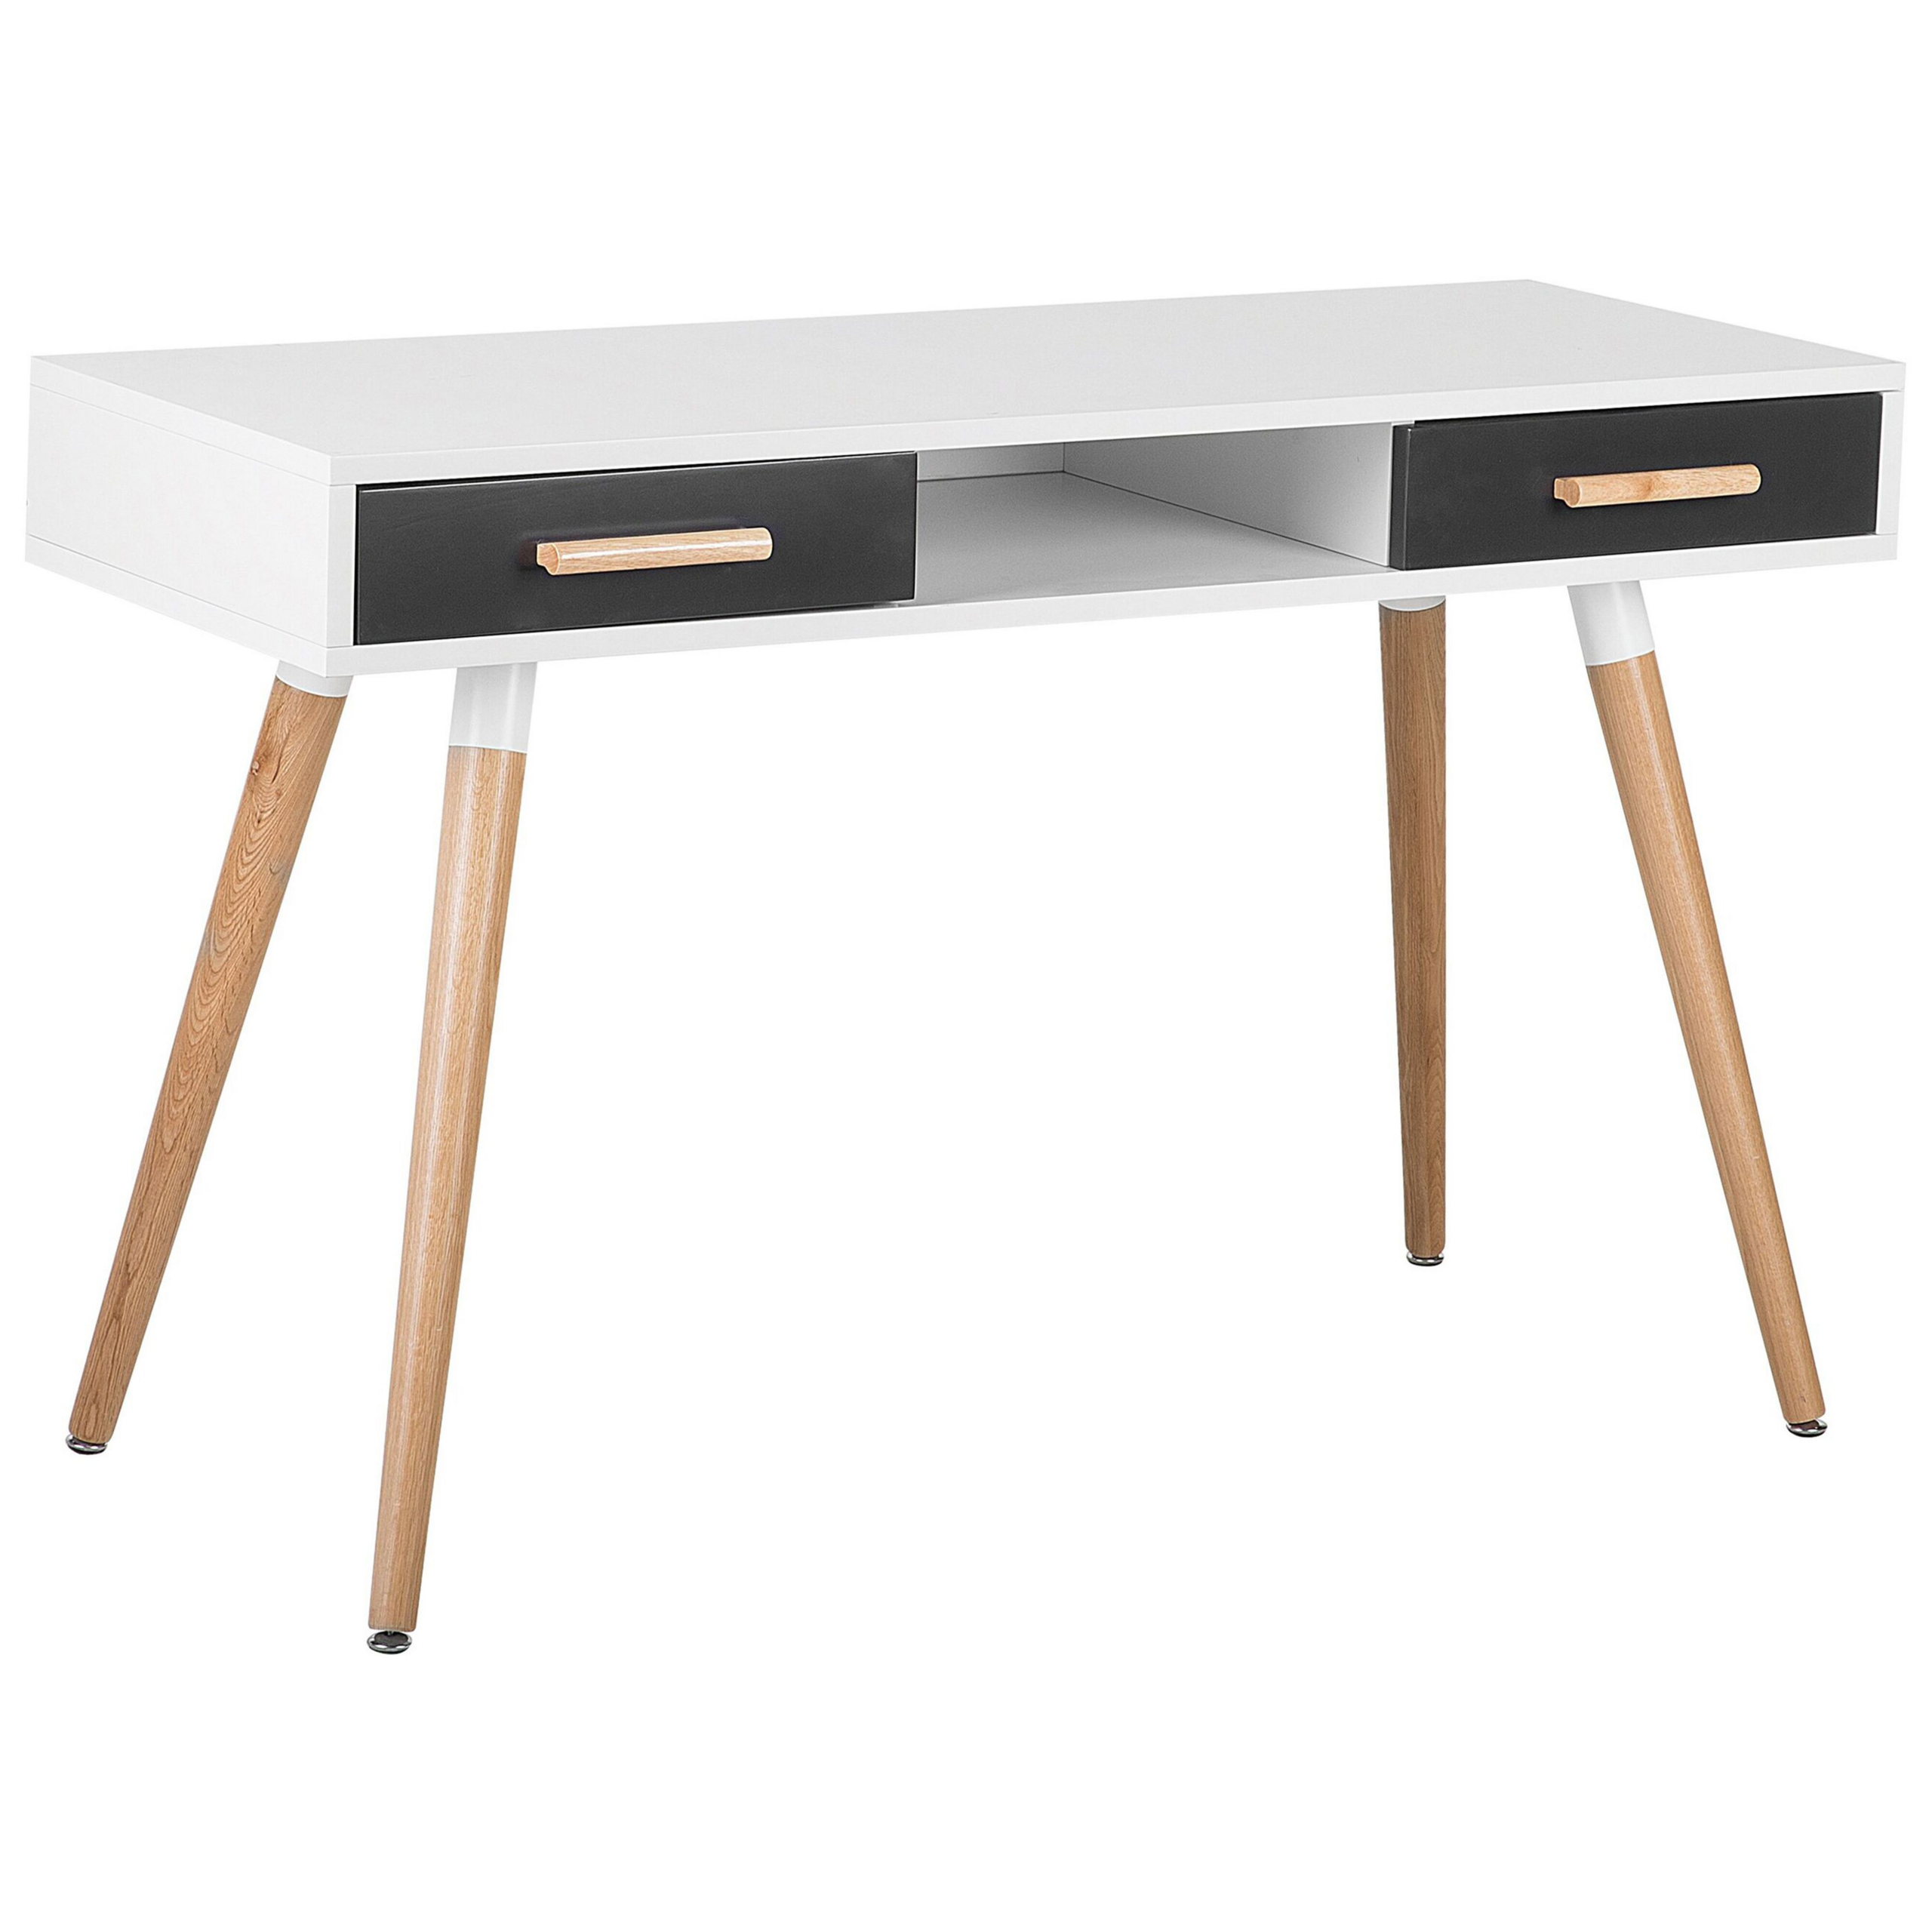 Beliani Desk White Grey 120 x 45 cm 2 Drawers Shelf Solid Wood Legs Contemporary